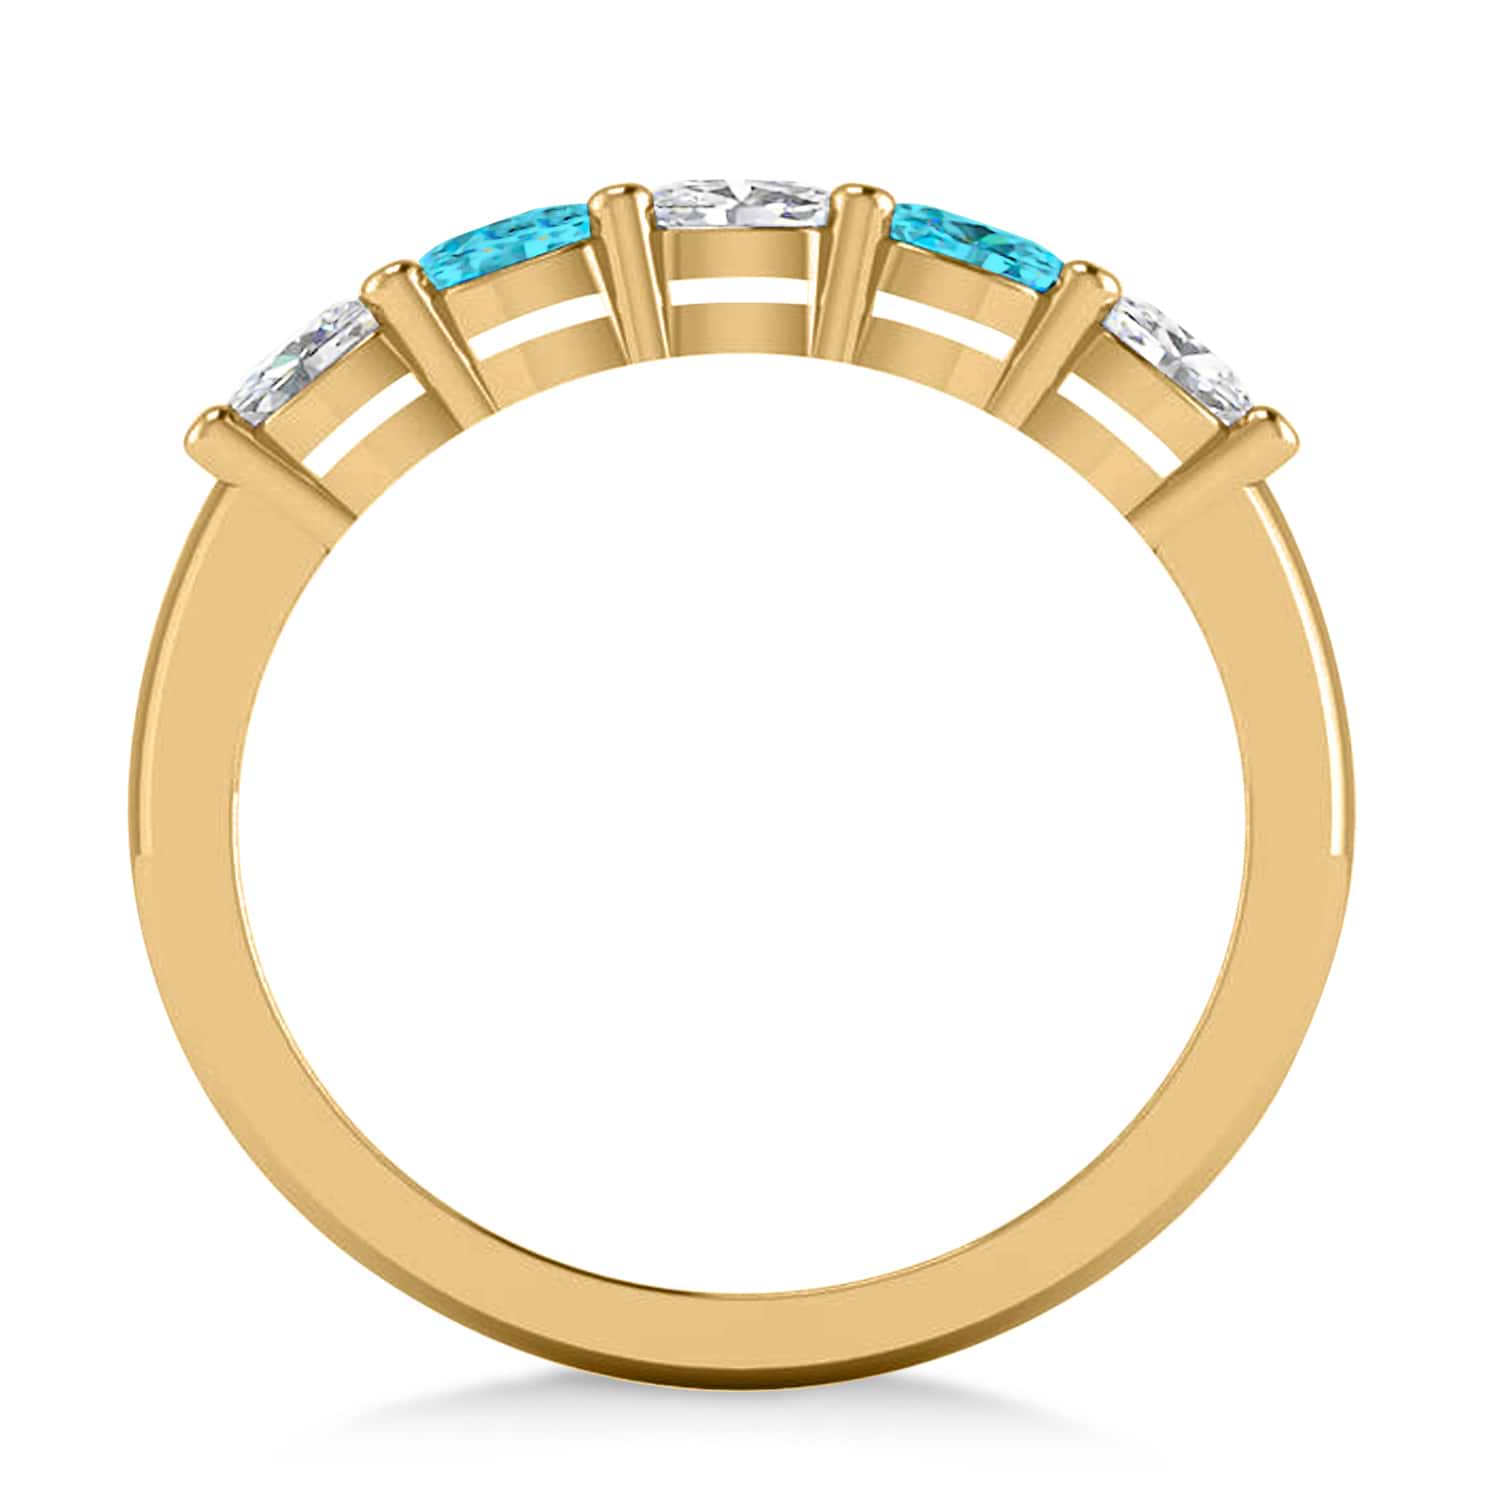 Oval Blue & White Diamond Five Stone Ring 14k Yellow Gold (1.00ct)